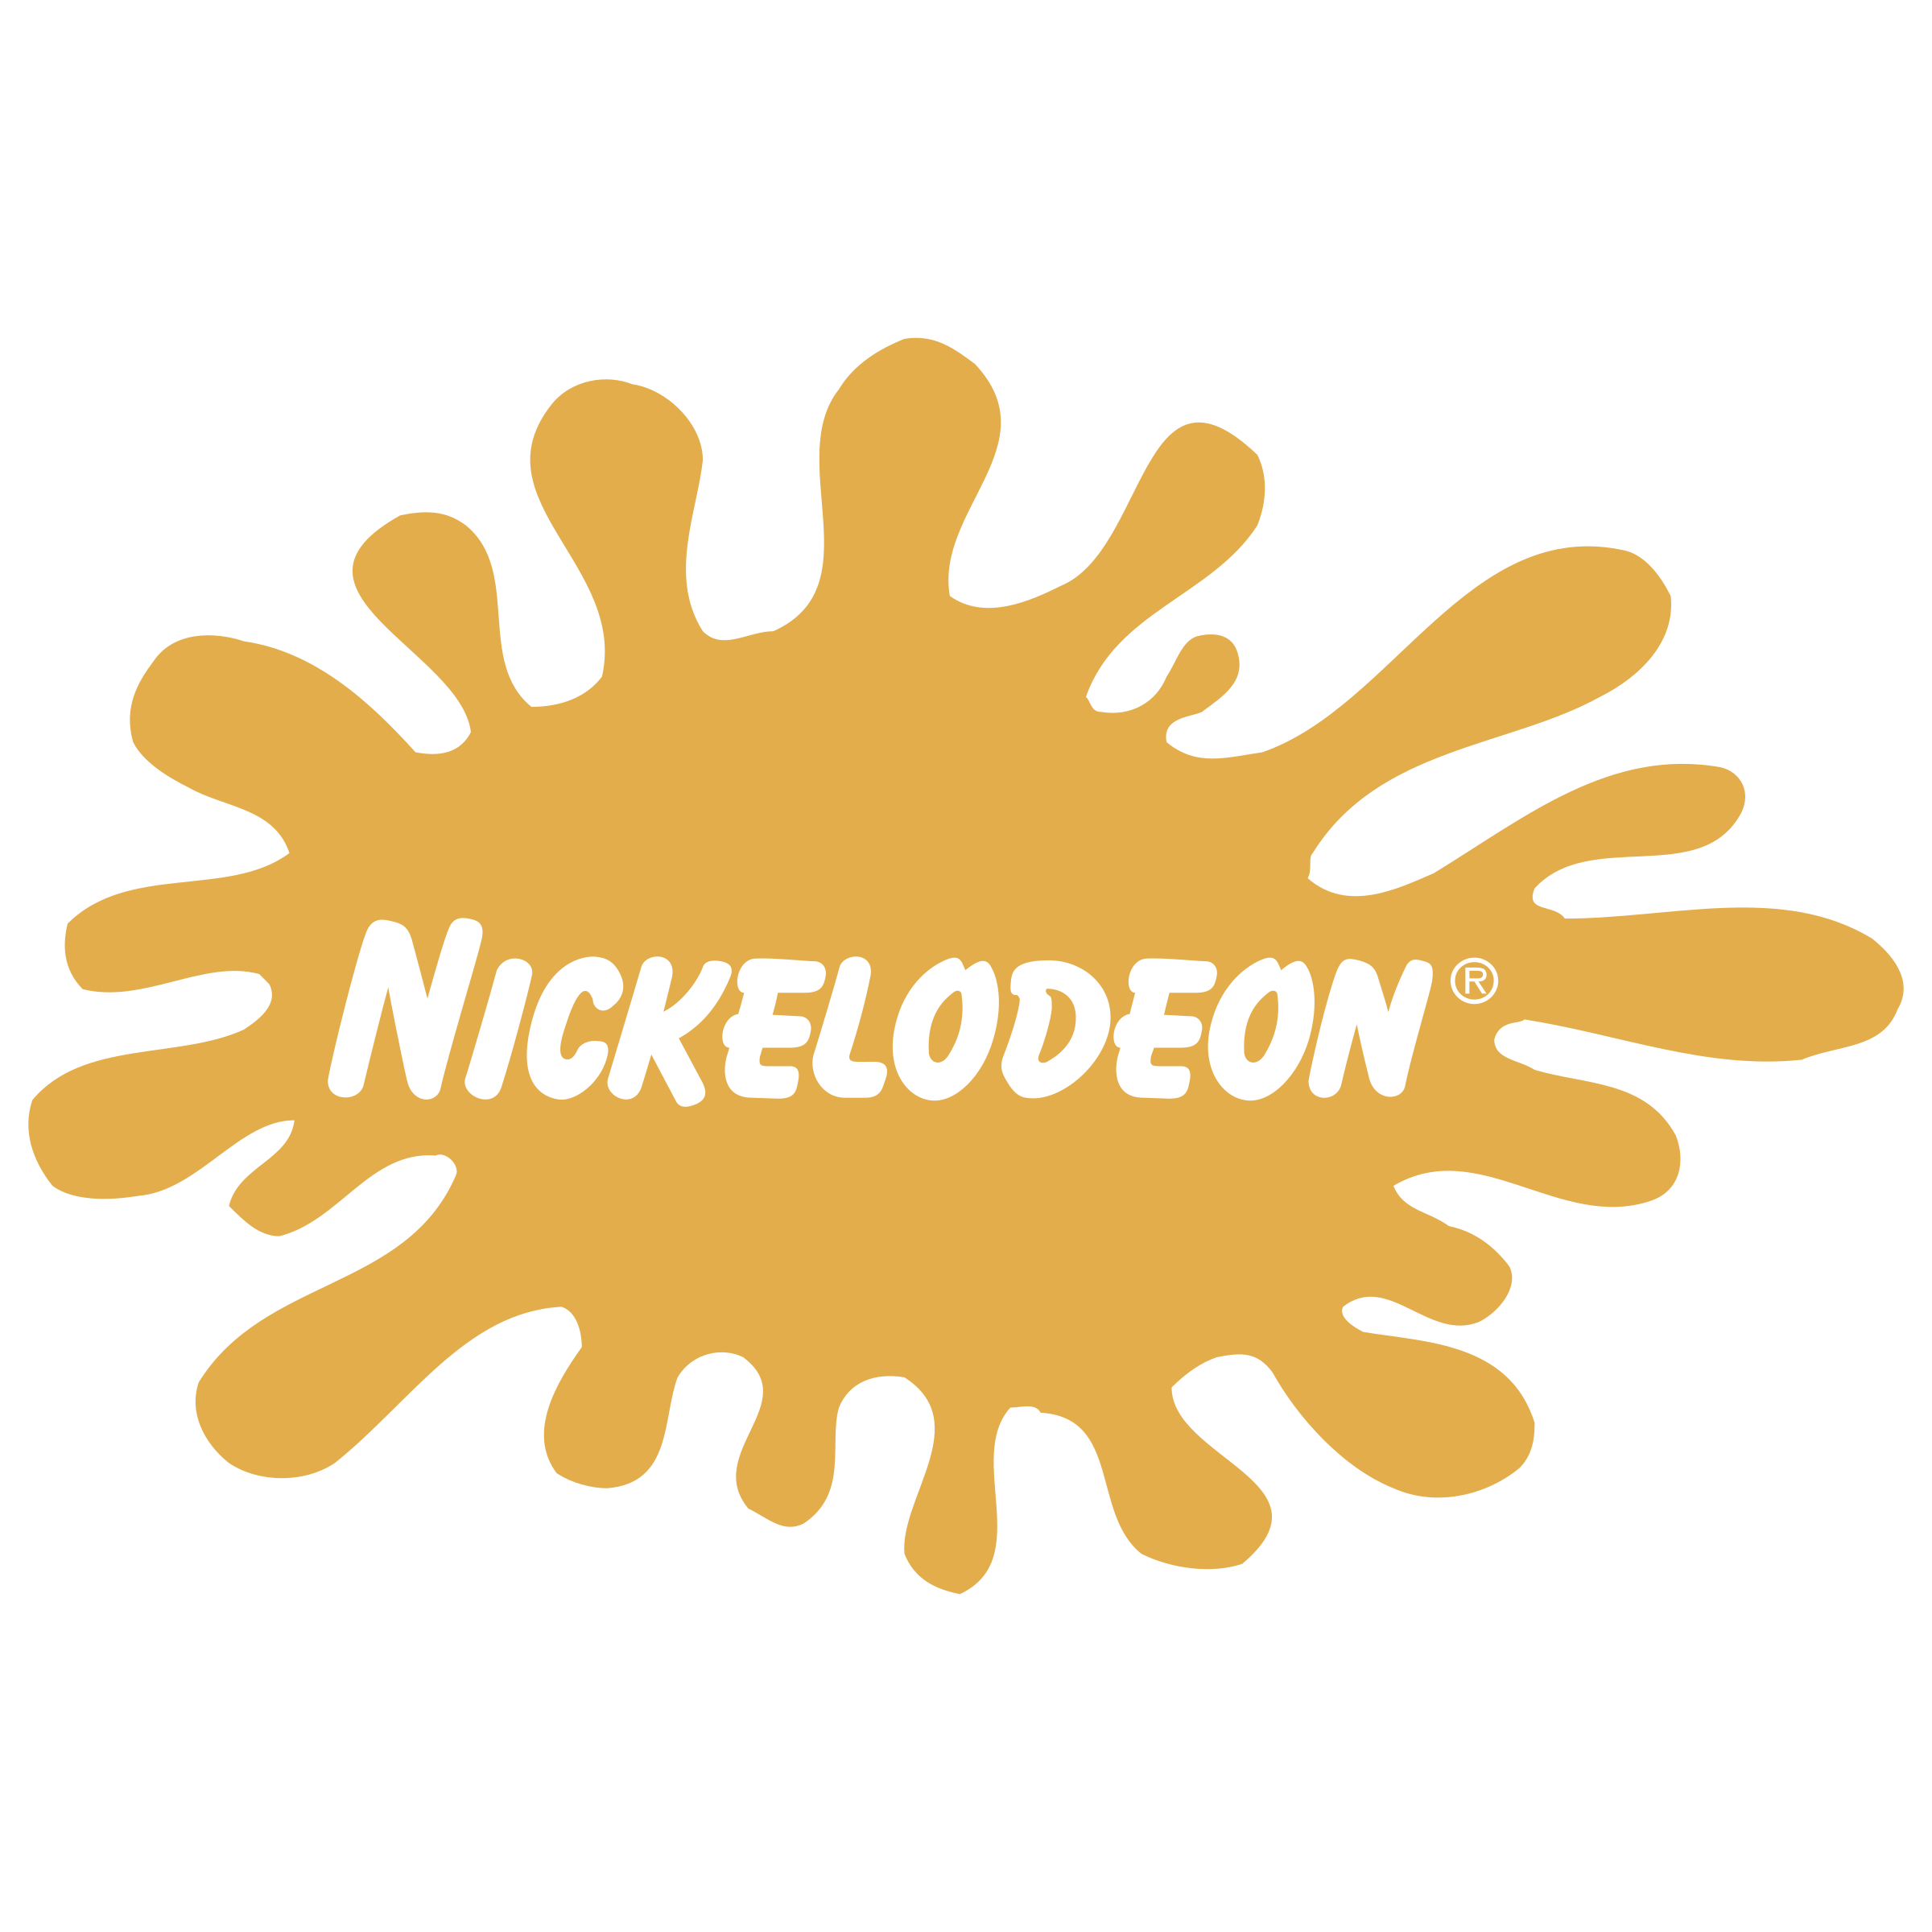 nickelodeon-logo-png-transparent.png